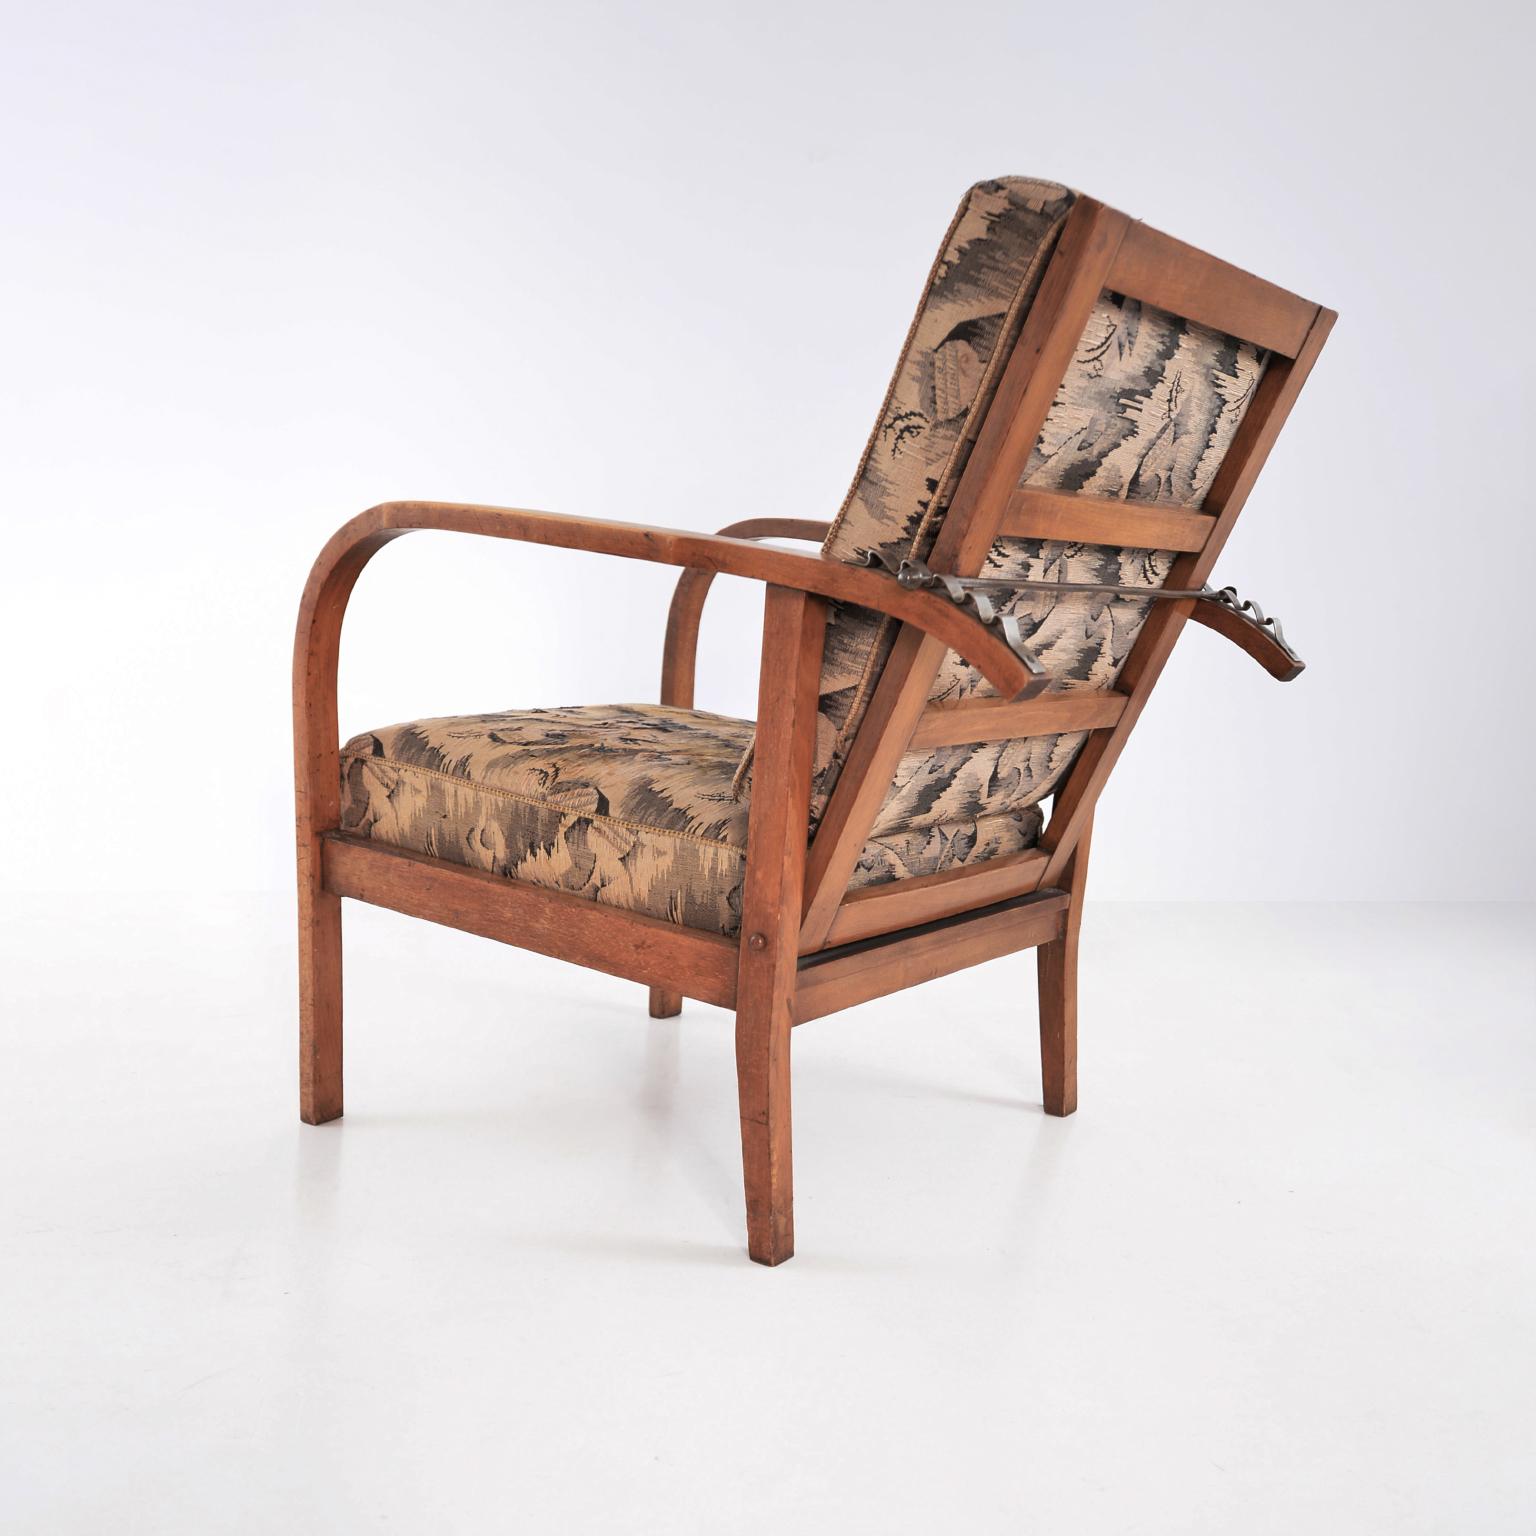 Pair of Modernist Wooden Armchairs by Jan Vaněk, Original Upholstery, circa 1935 In Good Condition For Sale In Berlin, DE